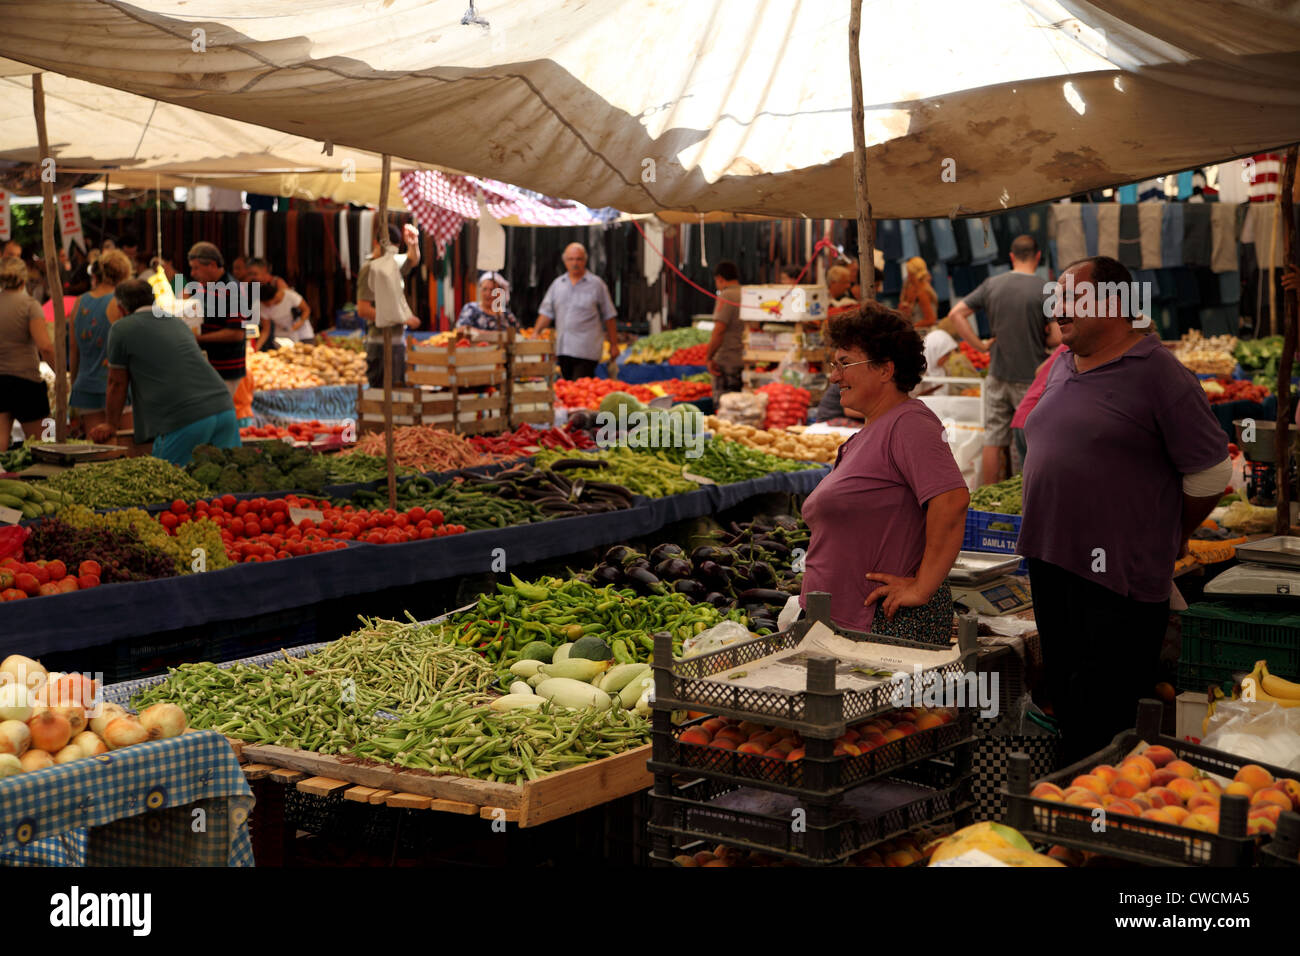 View of Turkish market in Koycegiz, a town near Dalyan, Turkey man and woman looking and smiling Stock Photo